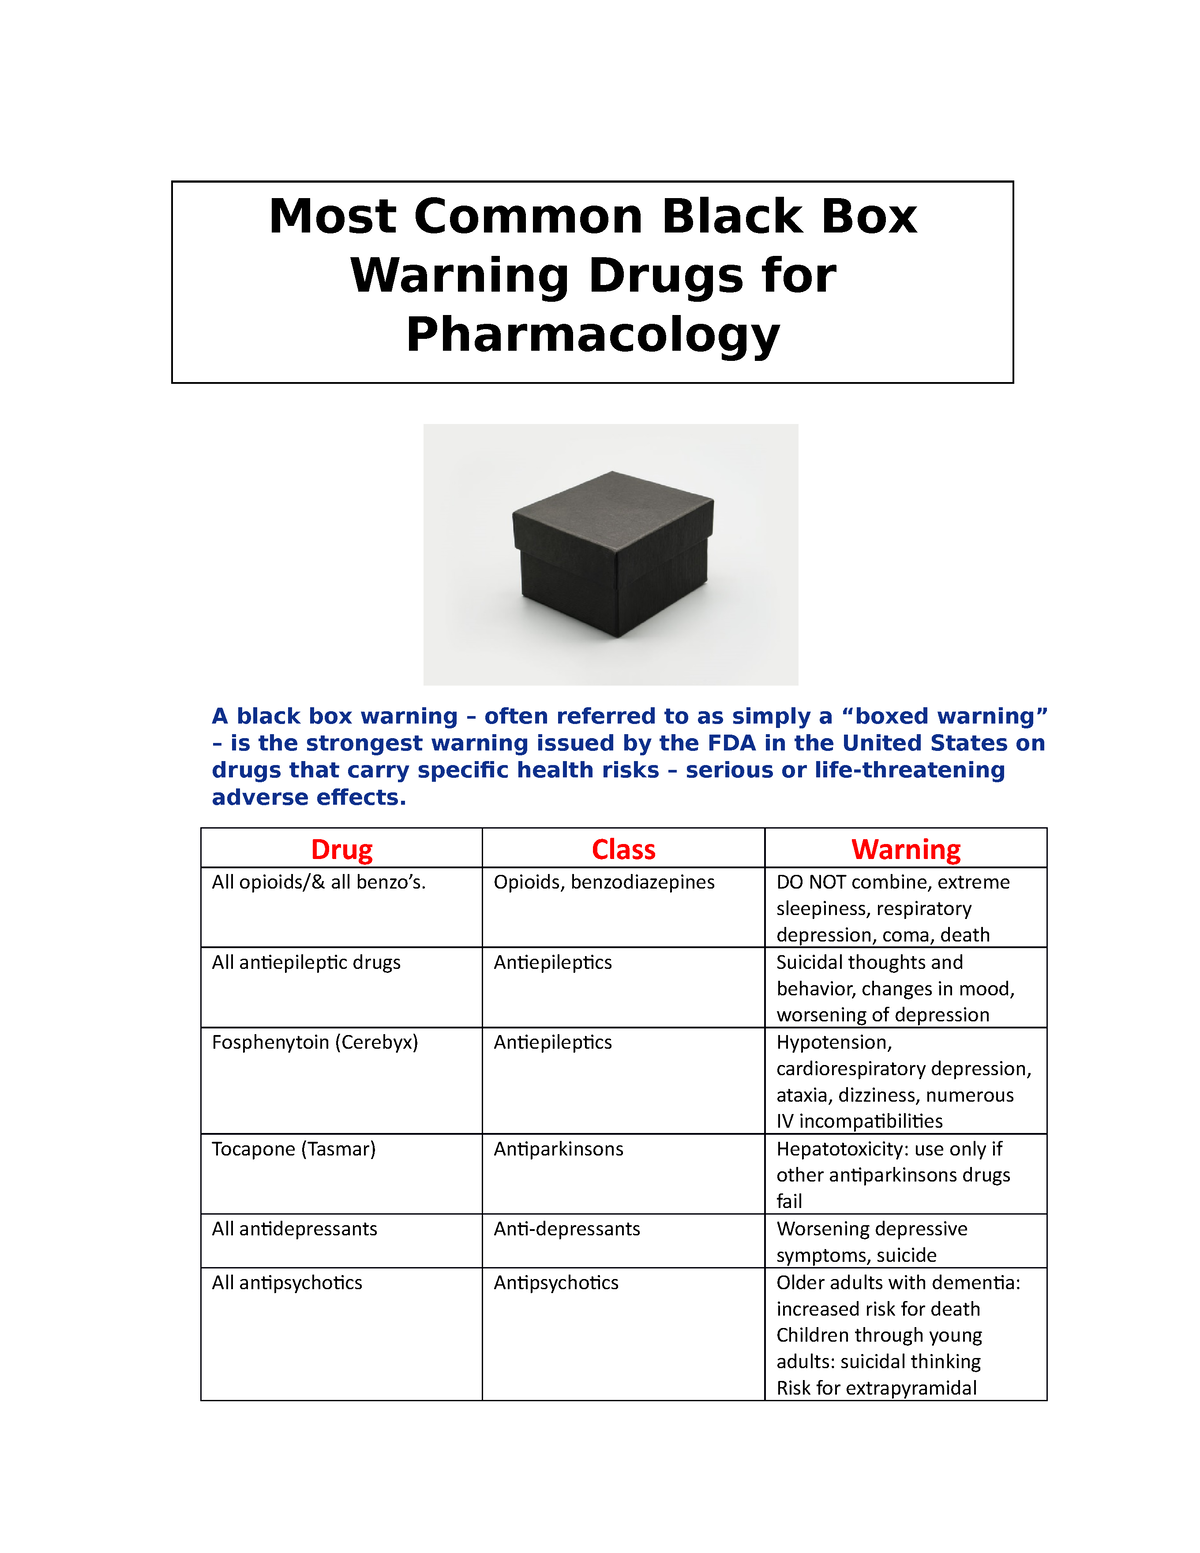 all black box